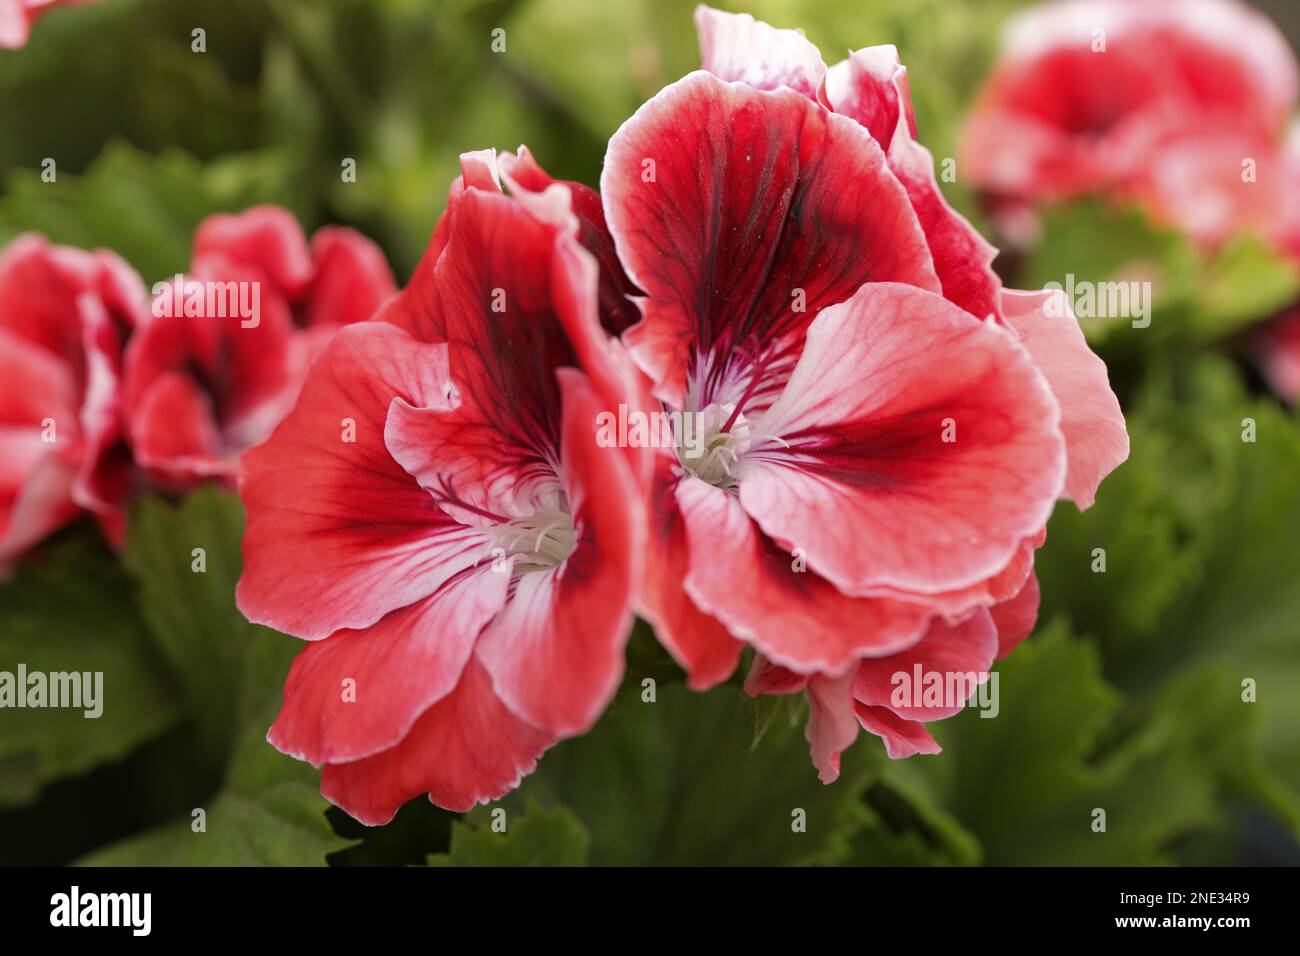 Wunderschöne malerische Blumen in rot - bellissimi fiori pittoreschi in rosso Foto Stock